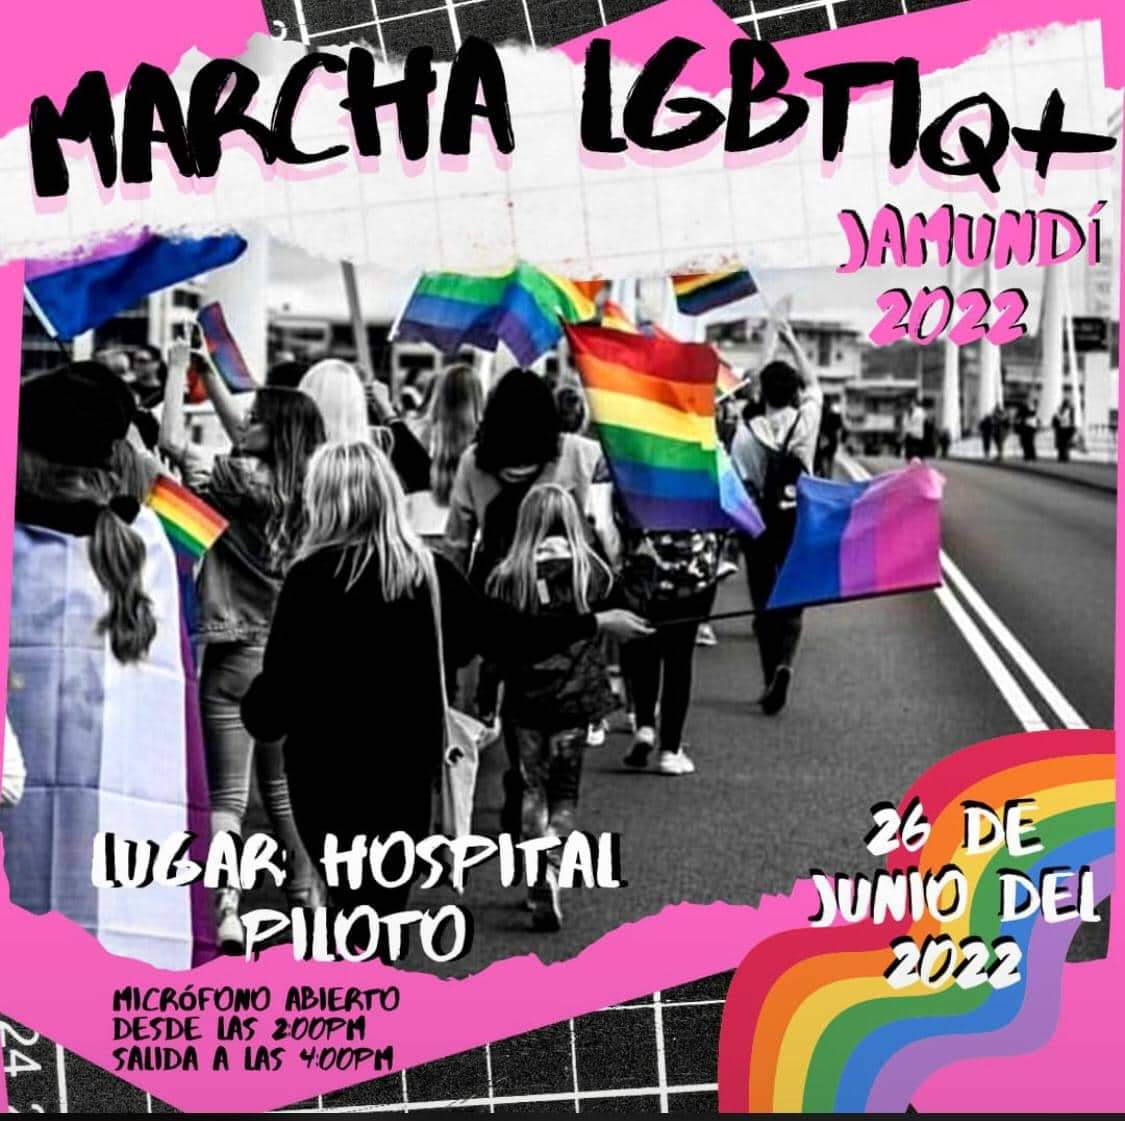  Marcha LGBTIQ+ Jamundi 2022 [JAMUND] 